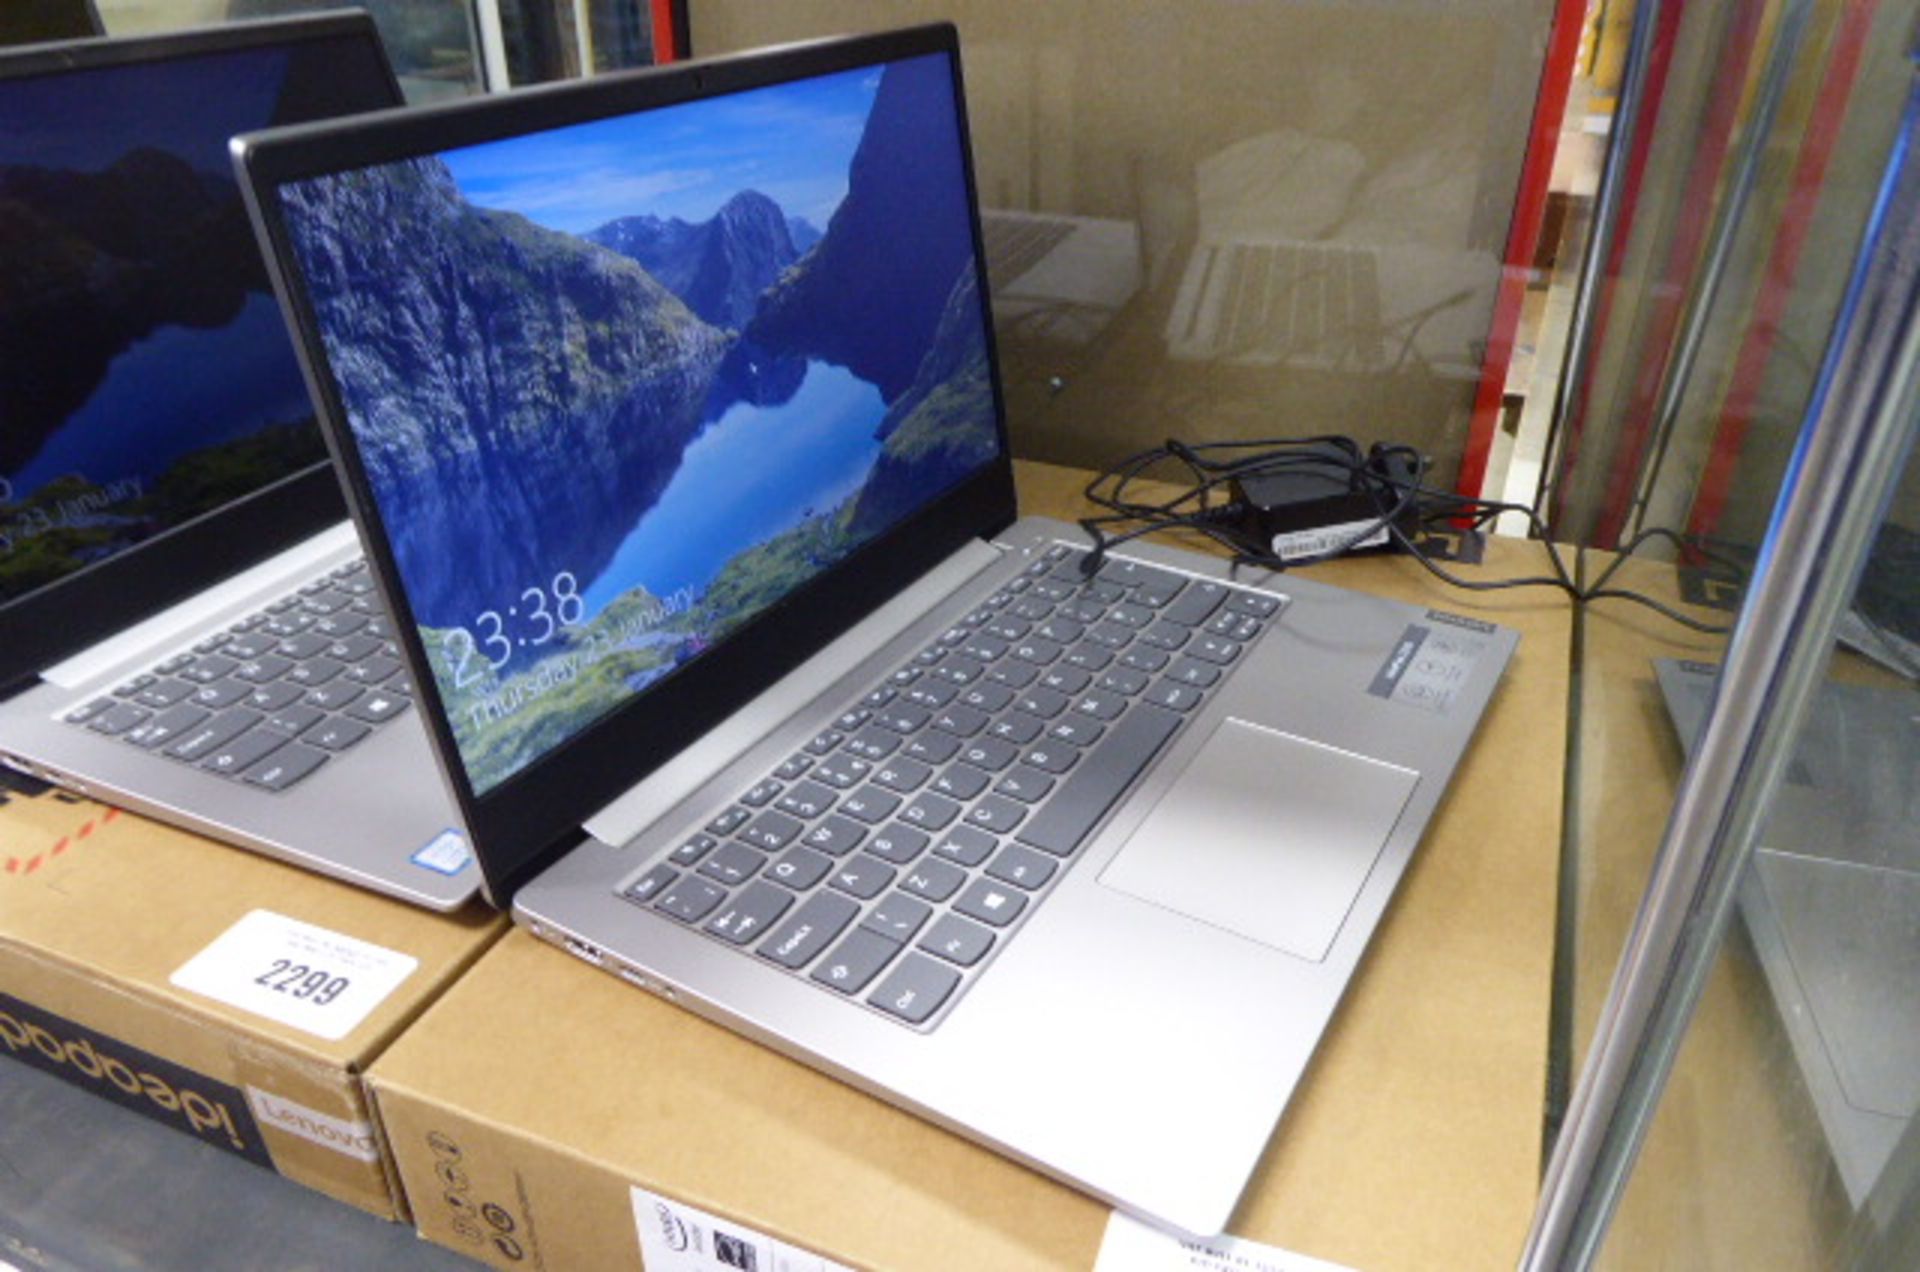 lenovo Ideapad S340 Windows 10 laptop Core i7 8th generation processor, 8Gb RAM 512GB SSD comes with